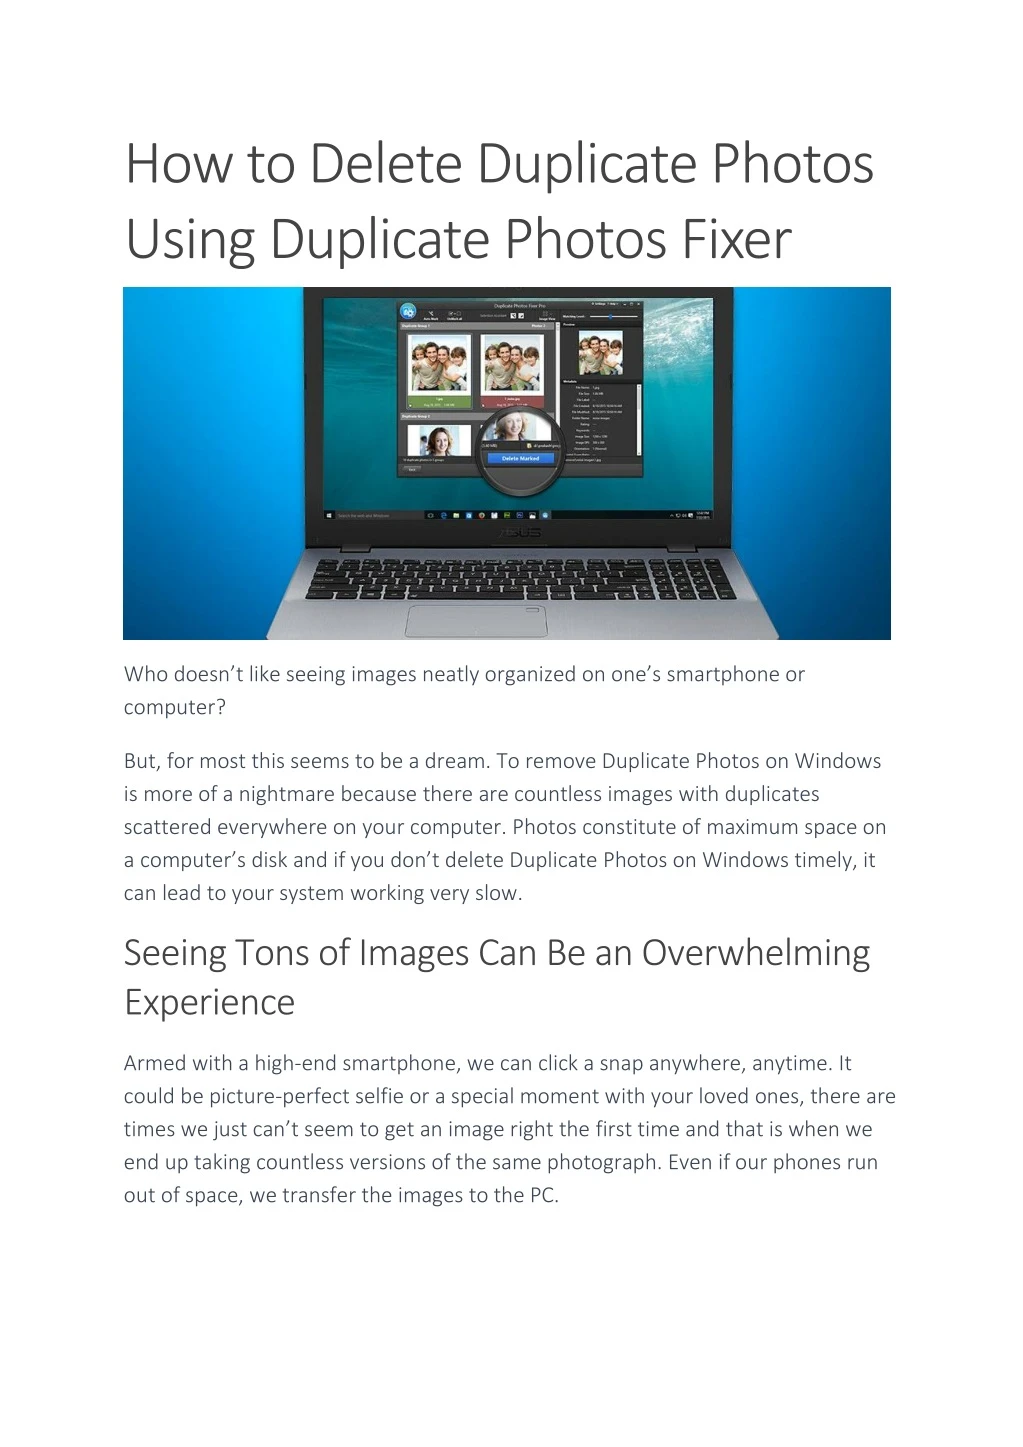 how to delete duplicate photos using duplicate